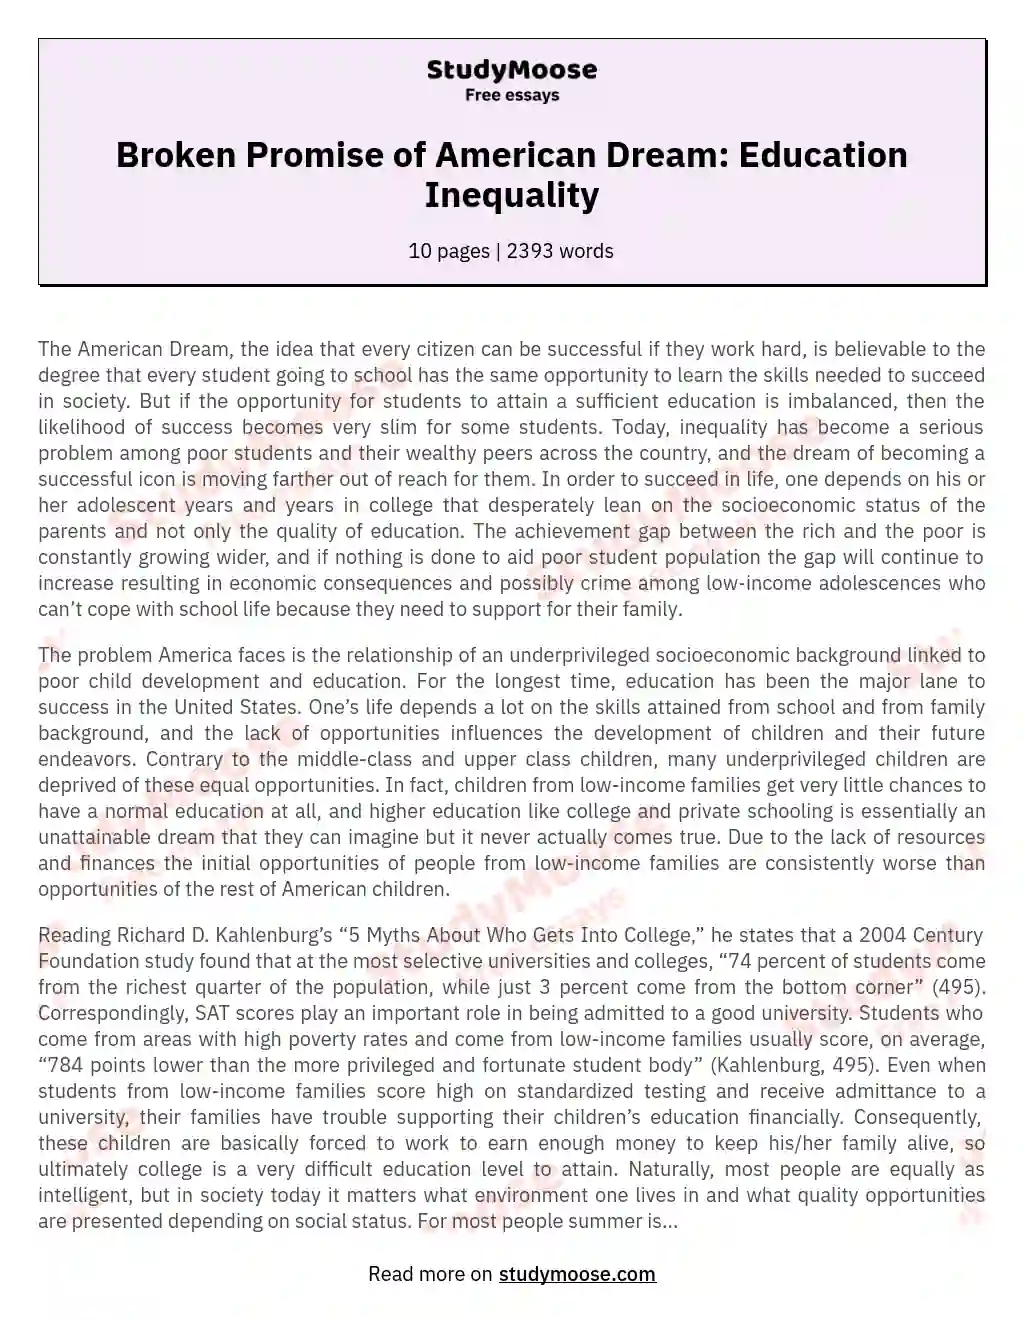 Broken Promise of American Dream: Education Inequality essay